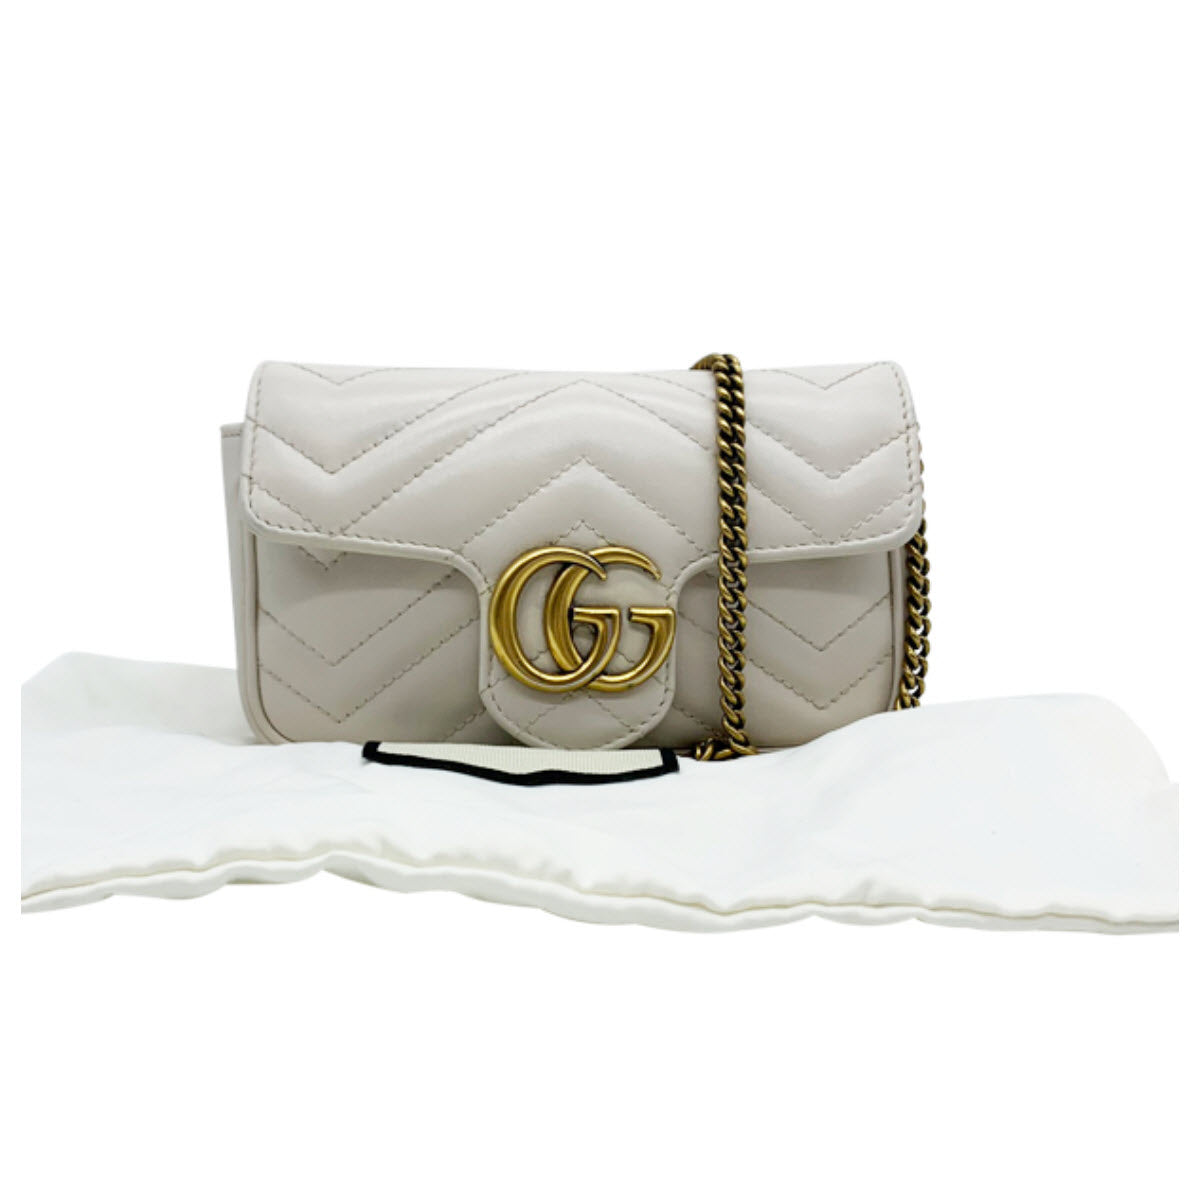 GG Marmont Super Mini white matelassé leather shoulder bag  Gg marmont  super mini, Marmont super mini, Mini shoulder bag